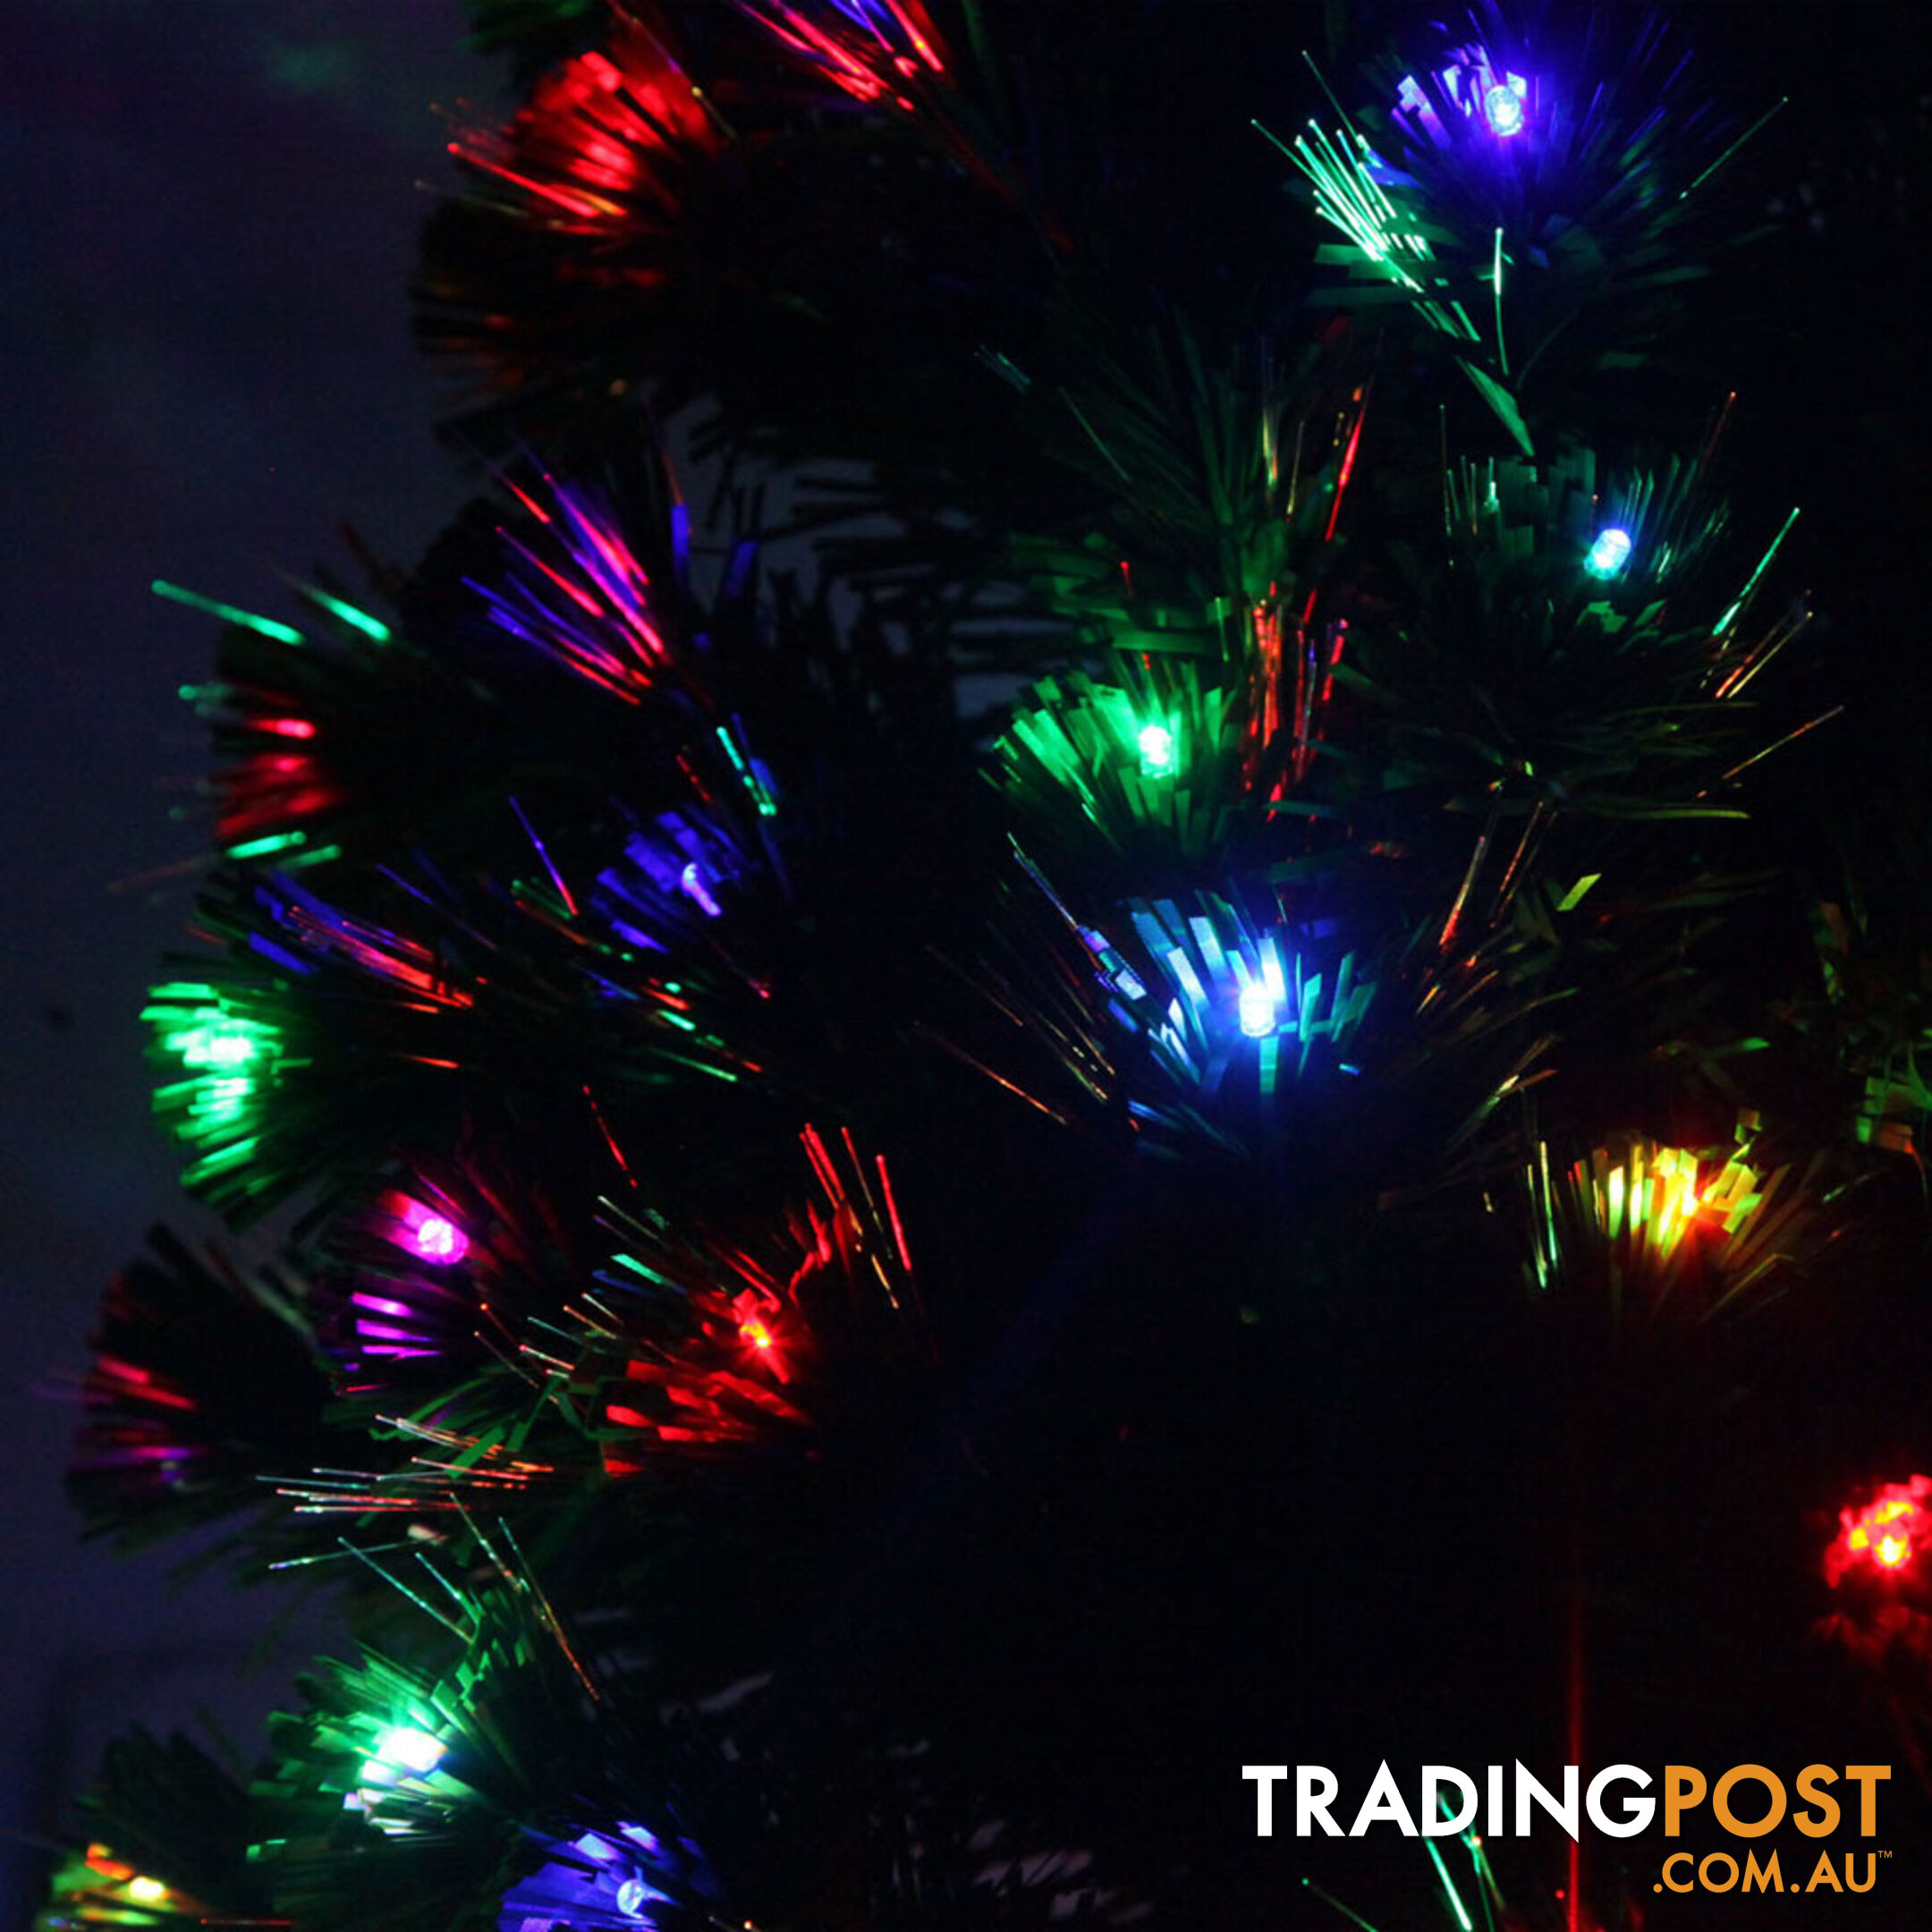 7FT Christmas Tree 260 LED Lights 2.1M Fabric Optic Xmas Home Decoration Green